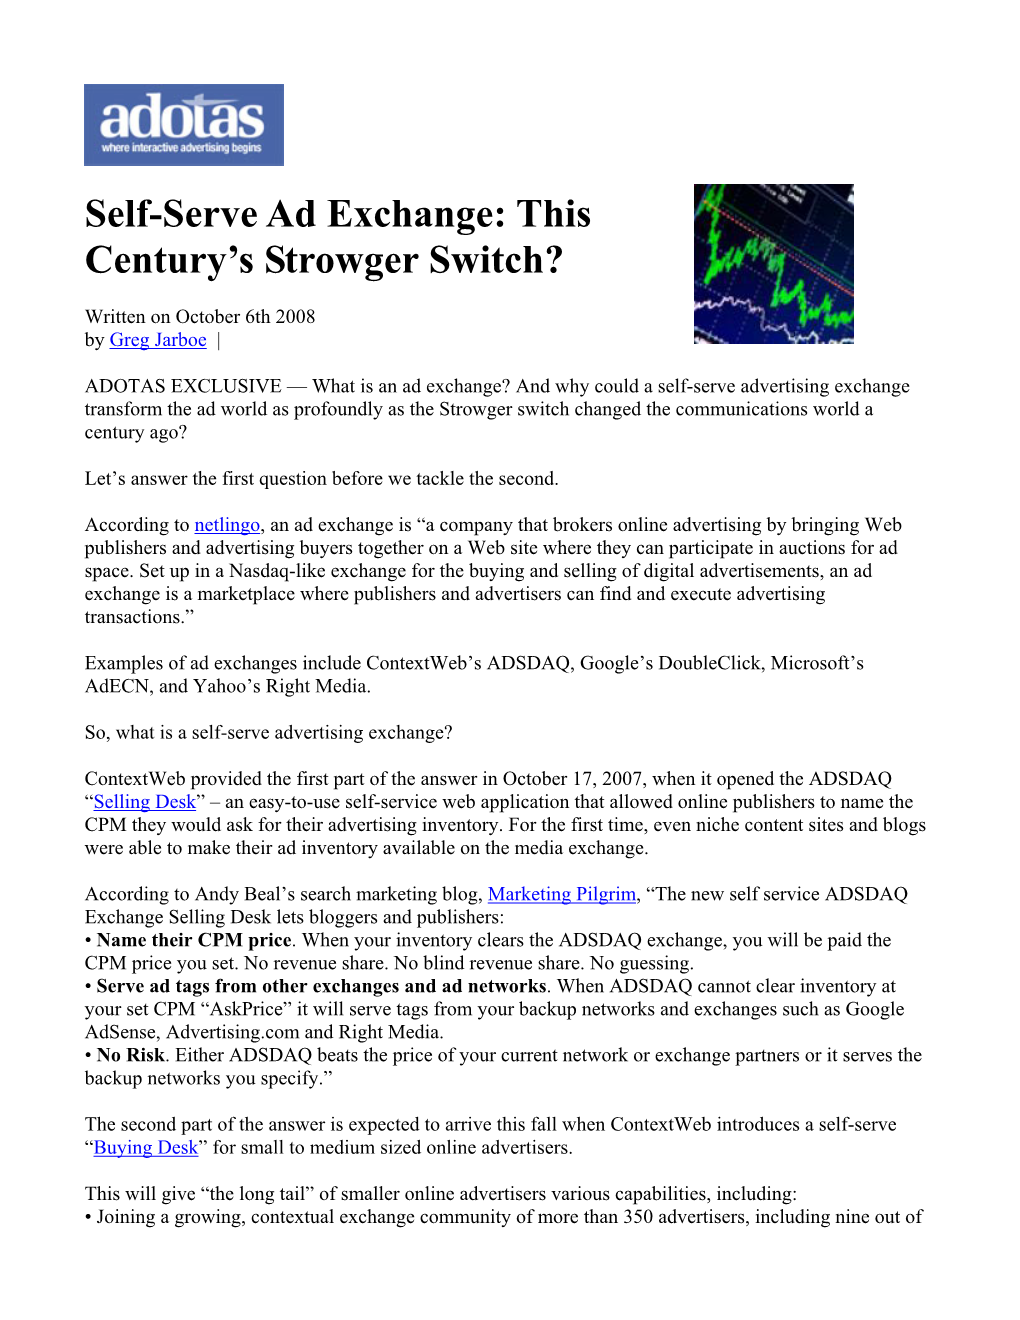 "Self-Serve Ad Exchange: This Century's Strowger Switch?" (PDF)